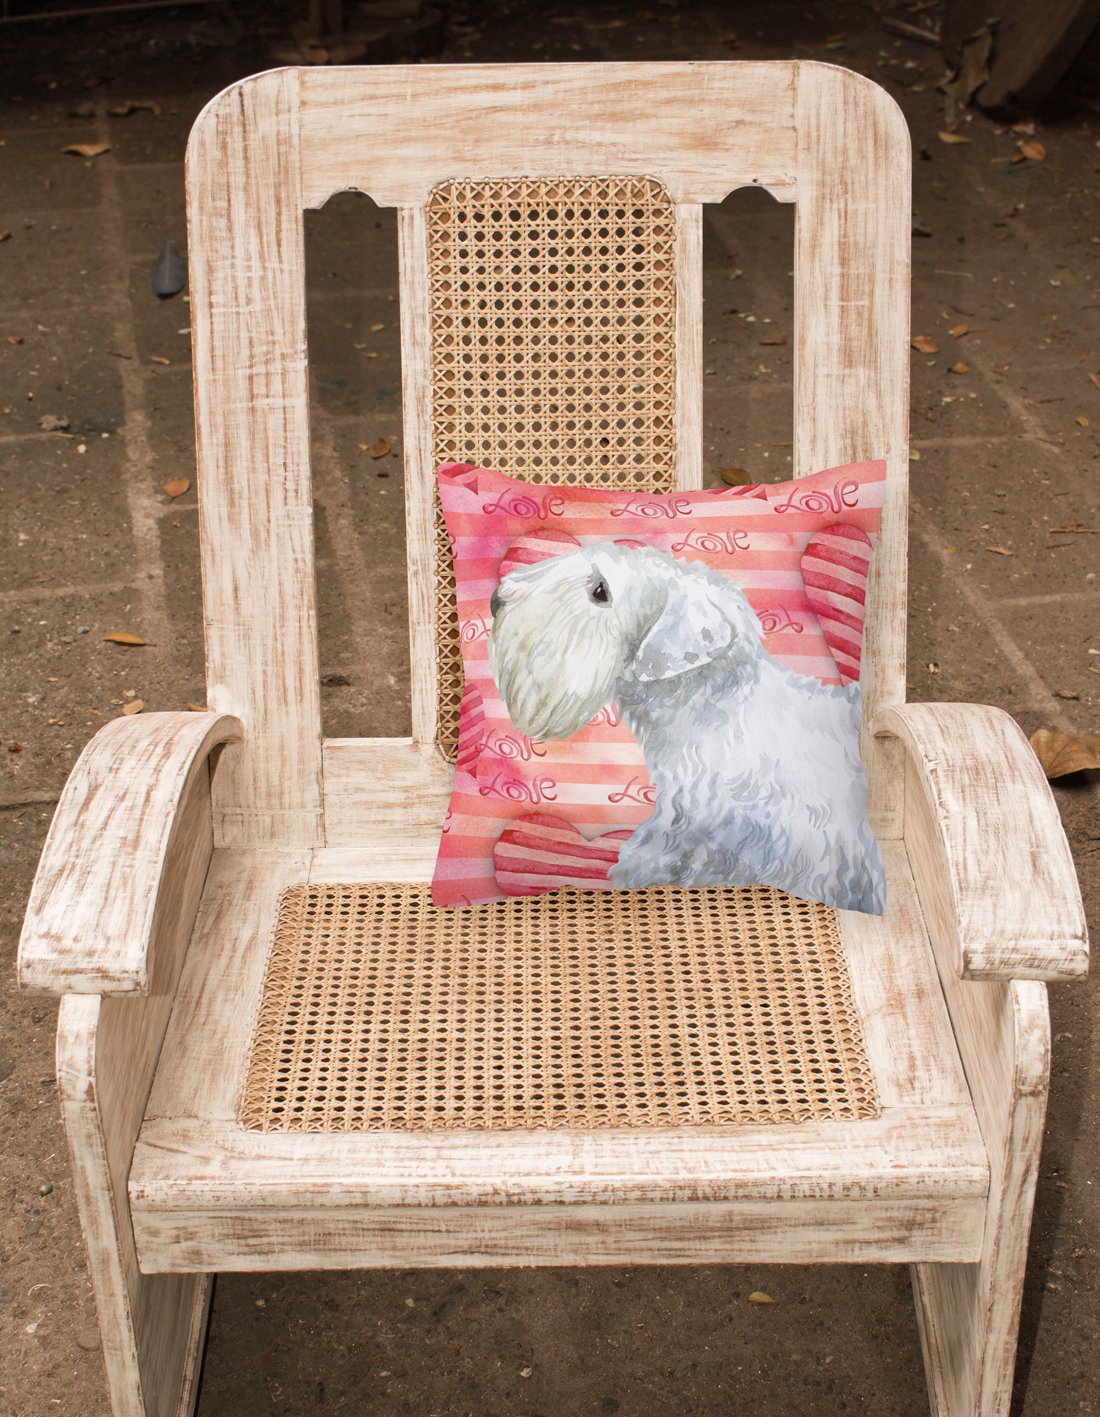 Sealyham Terrier Love Fabric Decorative Pillow BB9771PW1818 by Caroline's Treasures